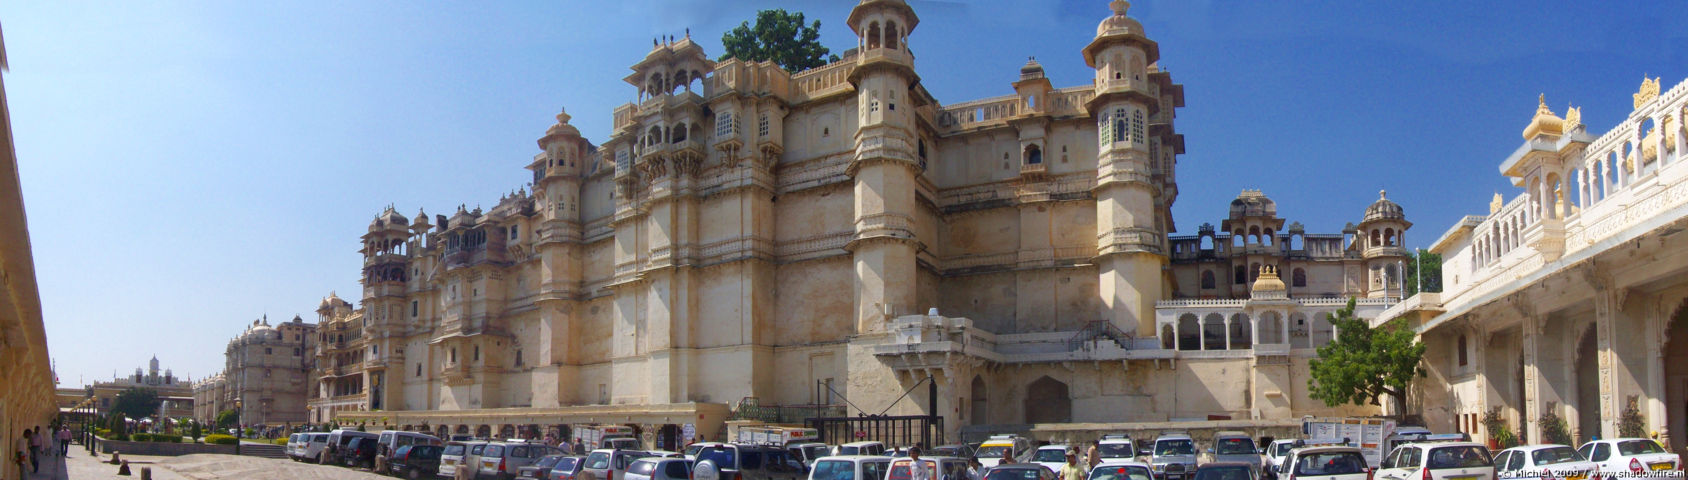 City Palace panorama City Palace, Udaipur, Rajasthan, India, India 2009,travel, photography,favorites, panoramas